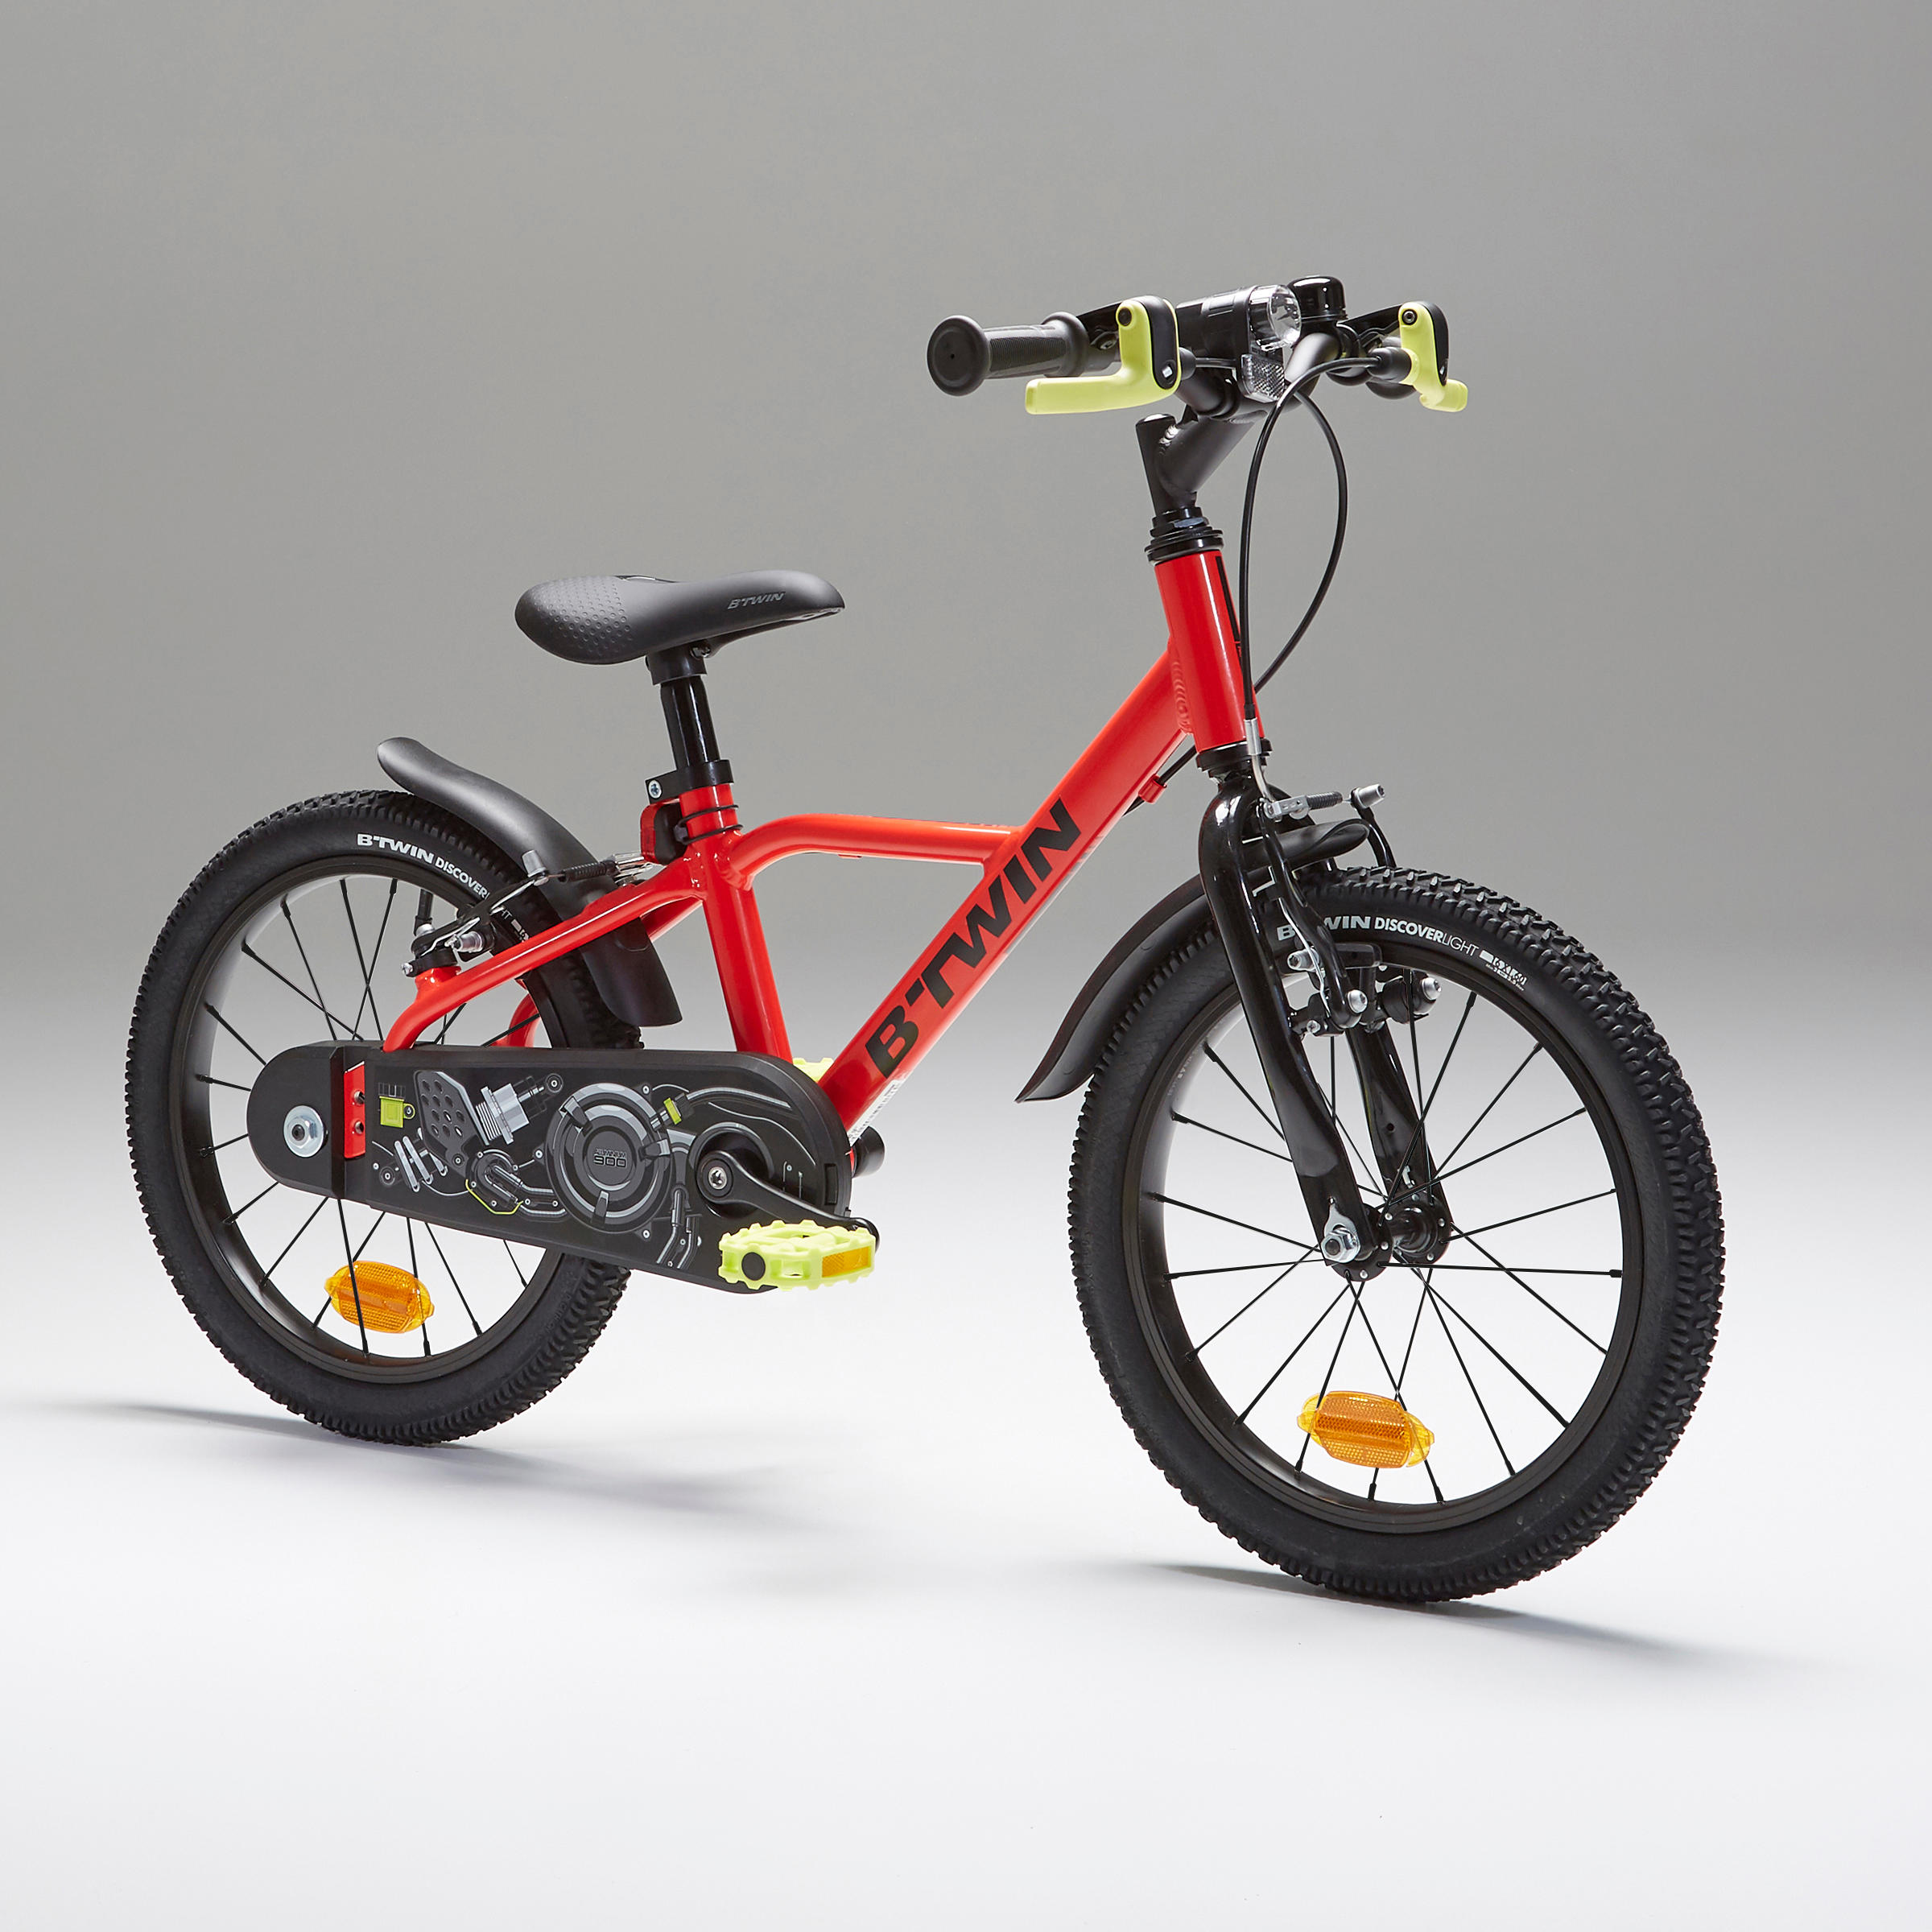 Kids' 16-inch, chain guard, easy-braking bike, red 2/11